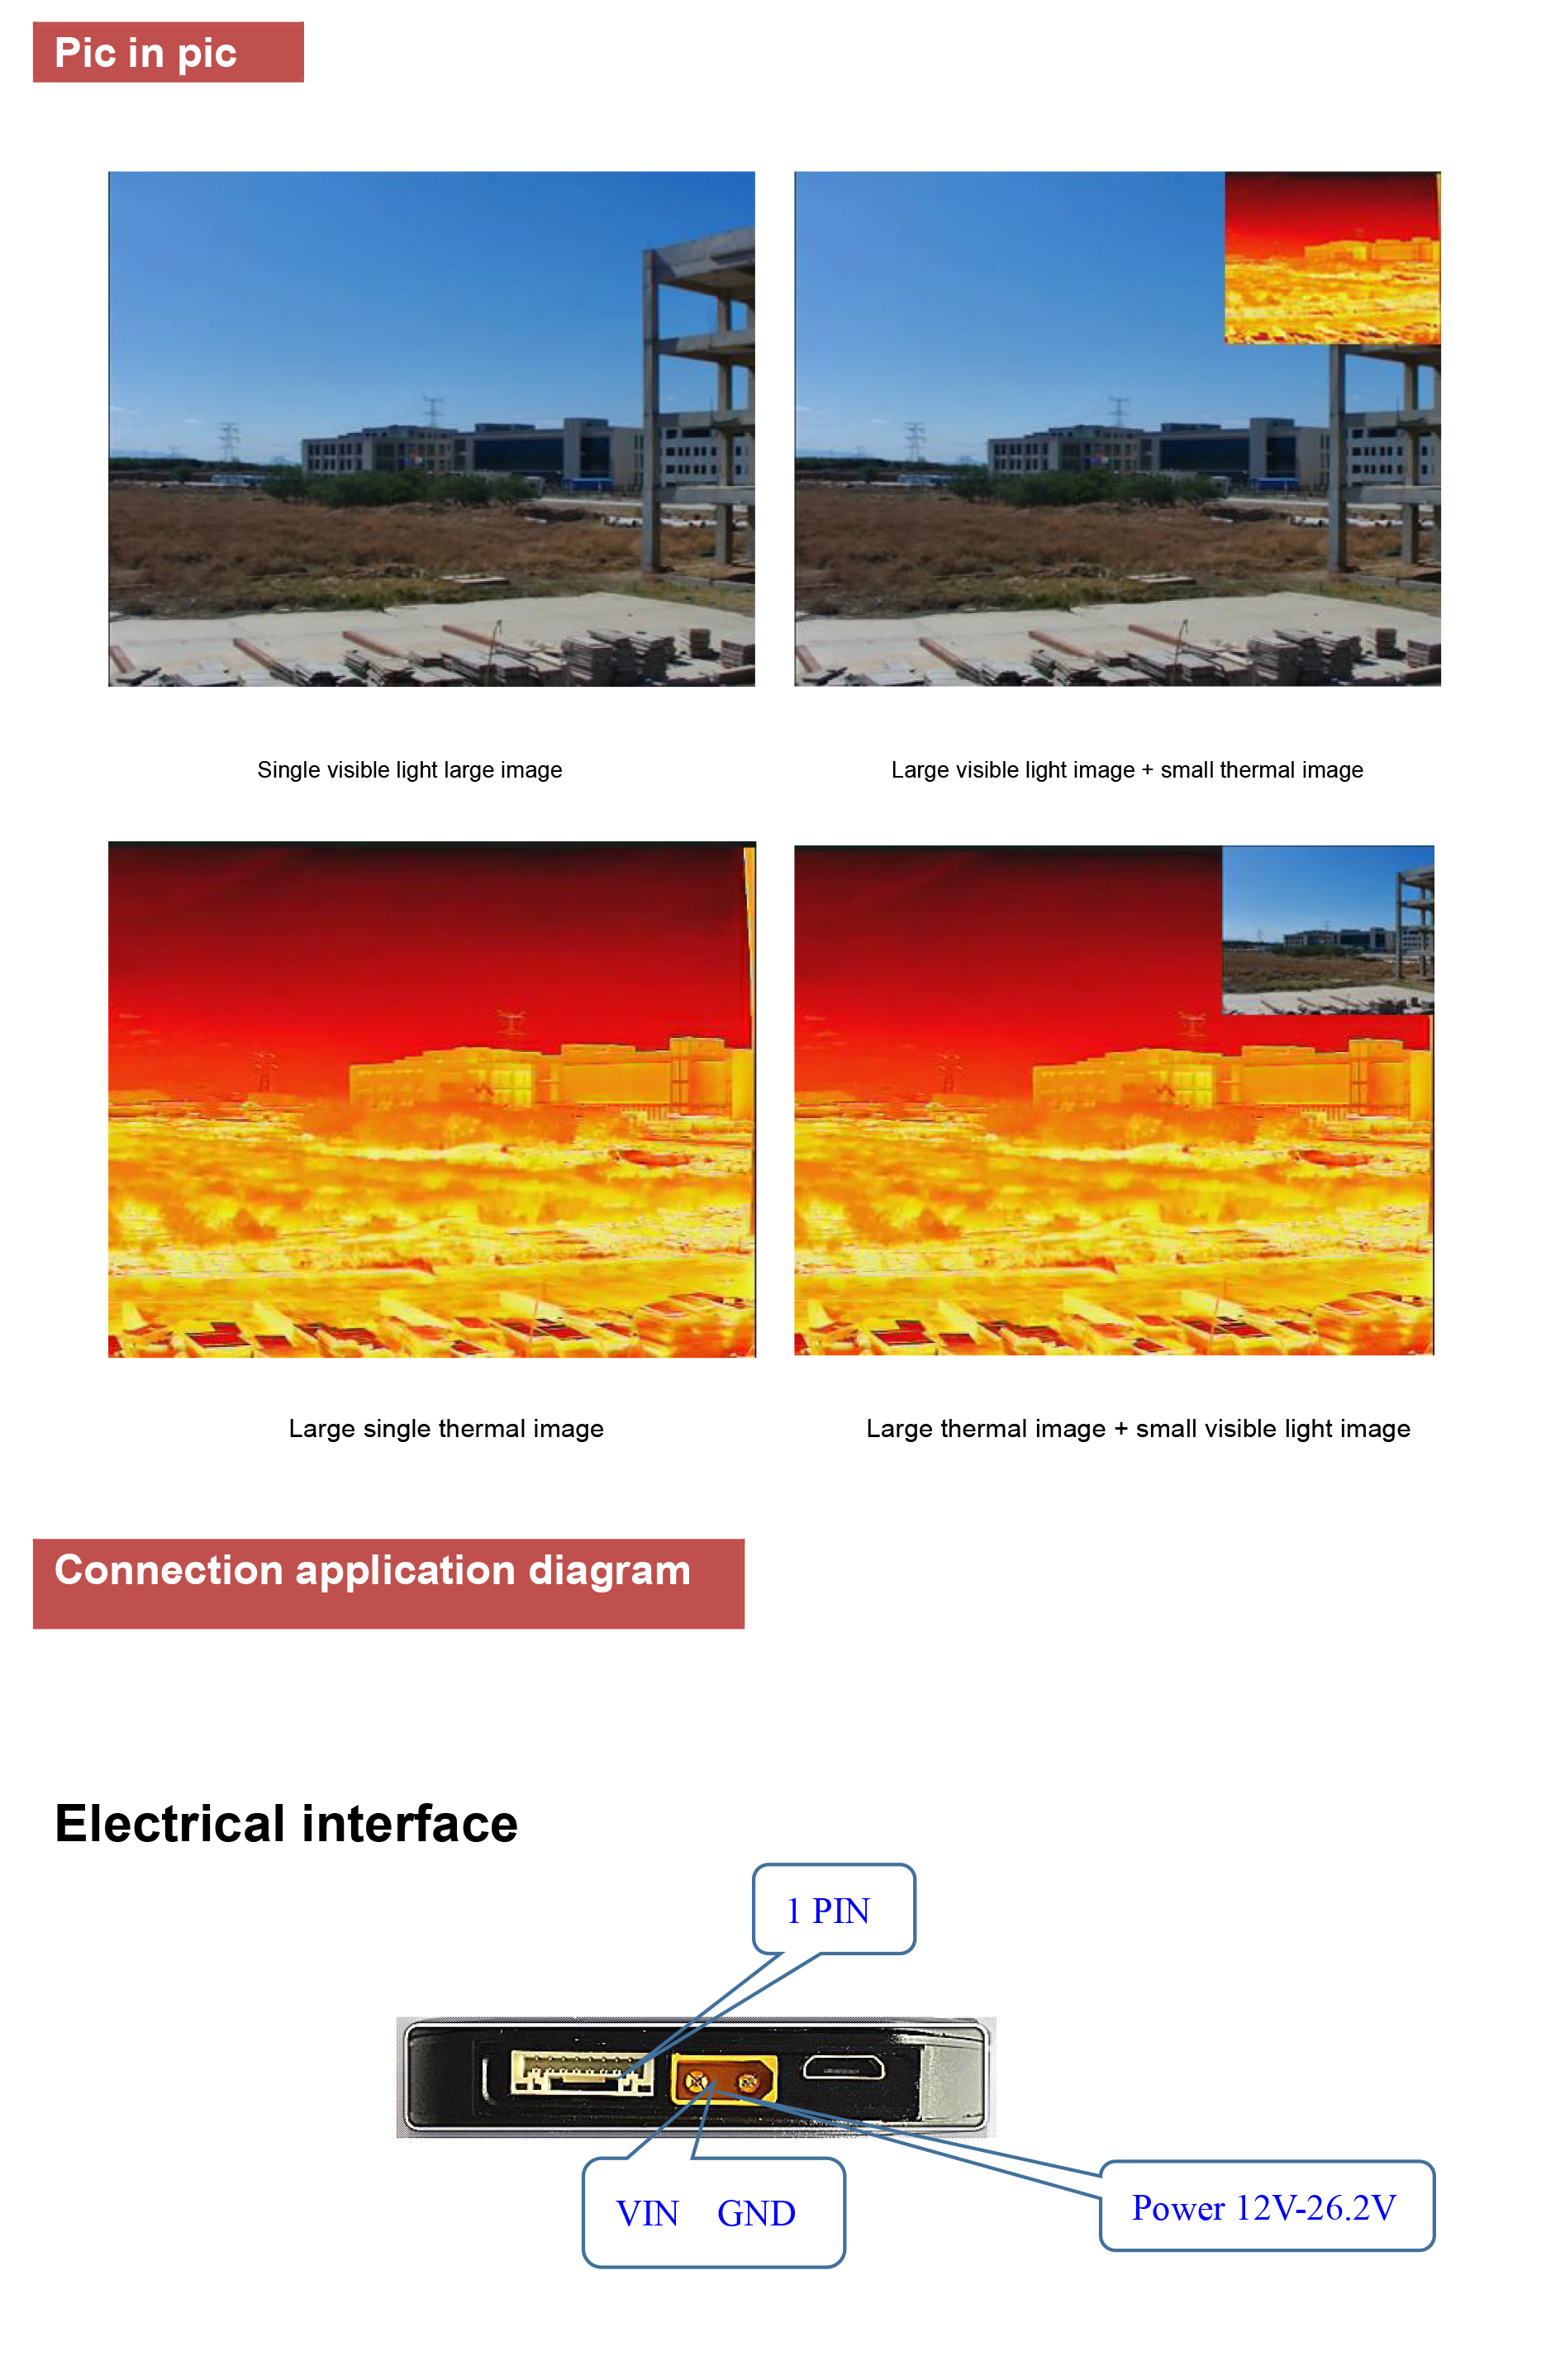 KIT10A 10x visible light+640x512 IR thermal imaging+1800m laser range finder+Thick beam laser irradiation